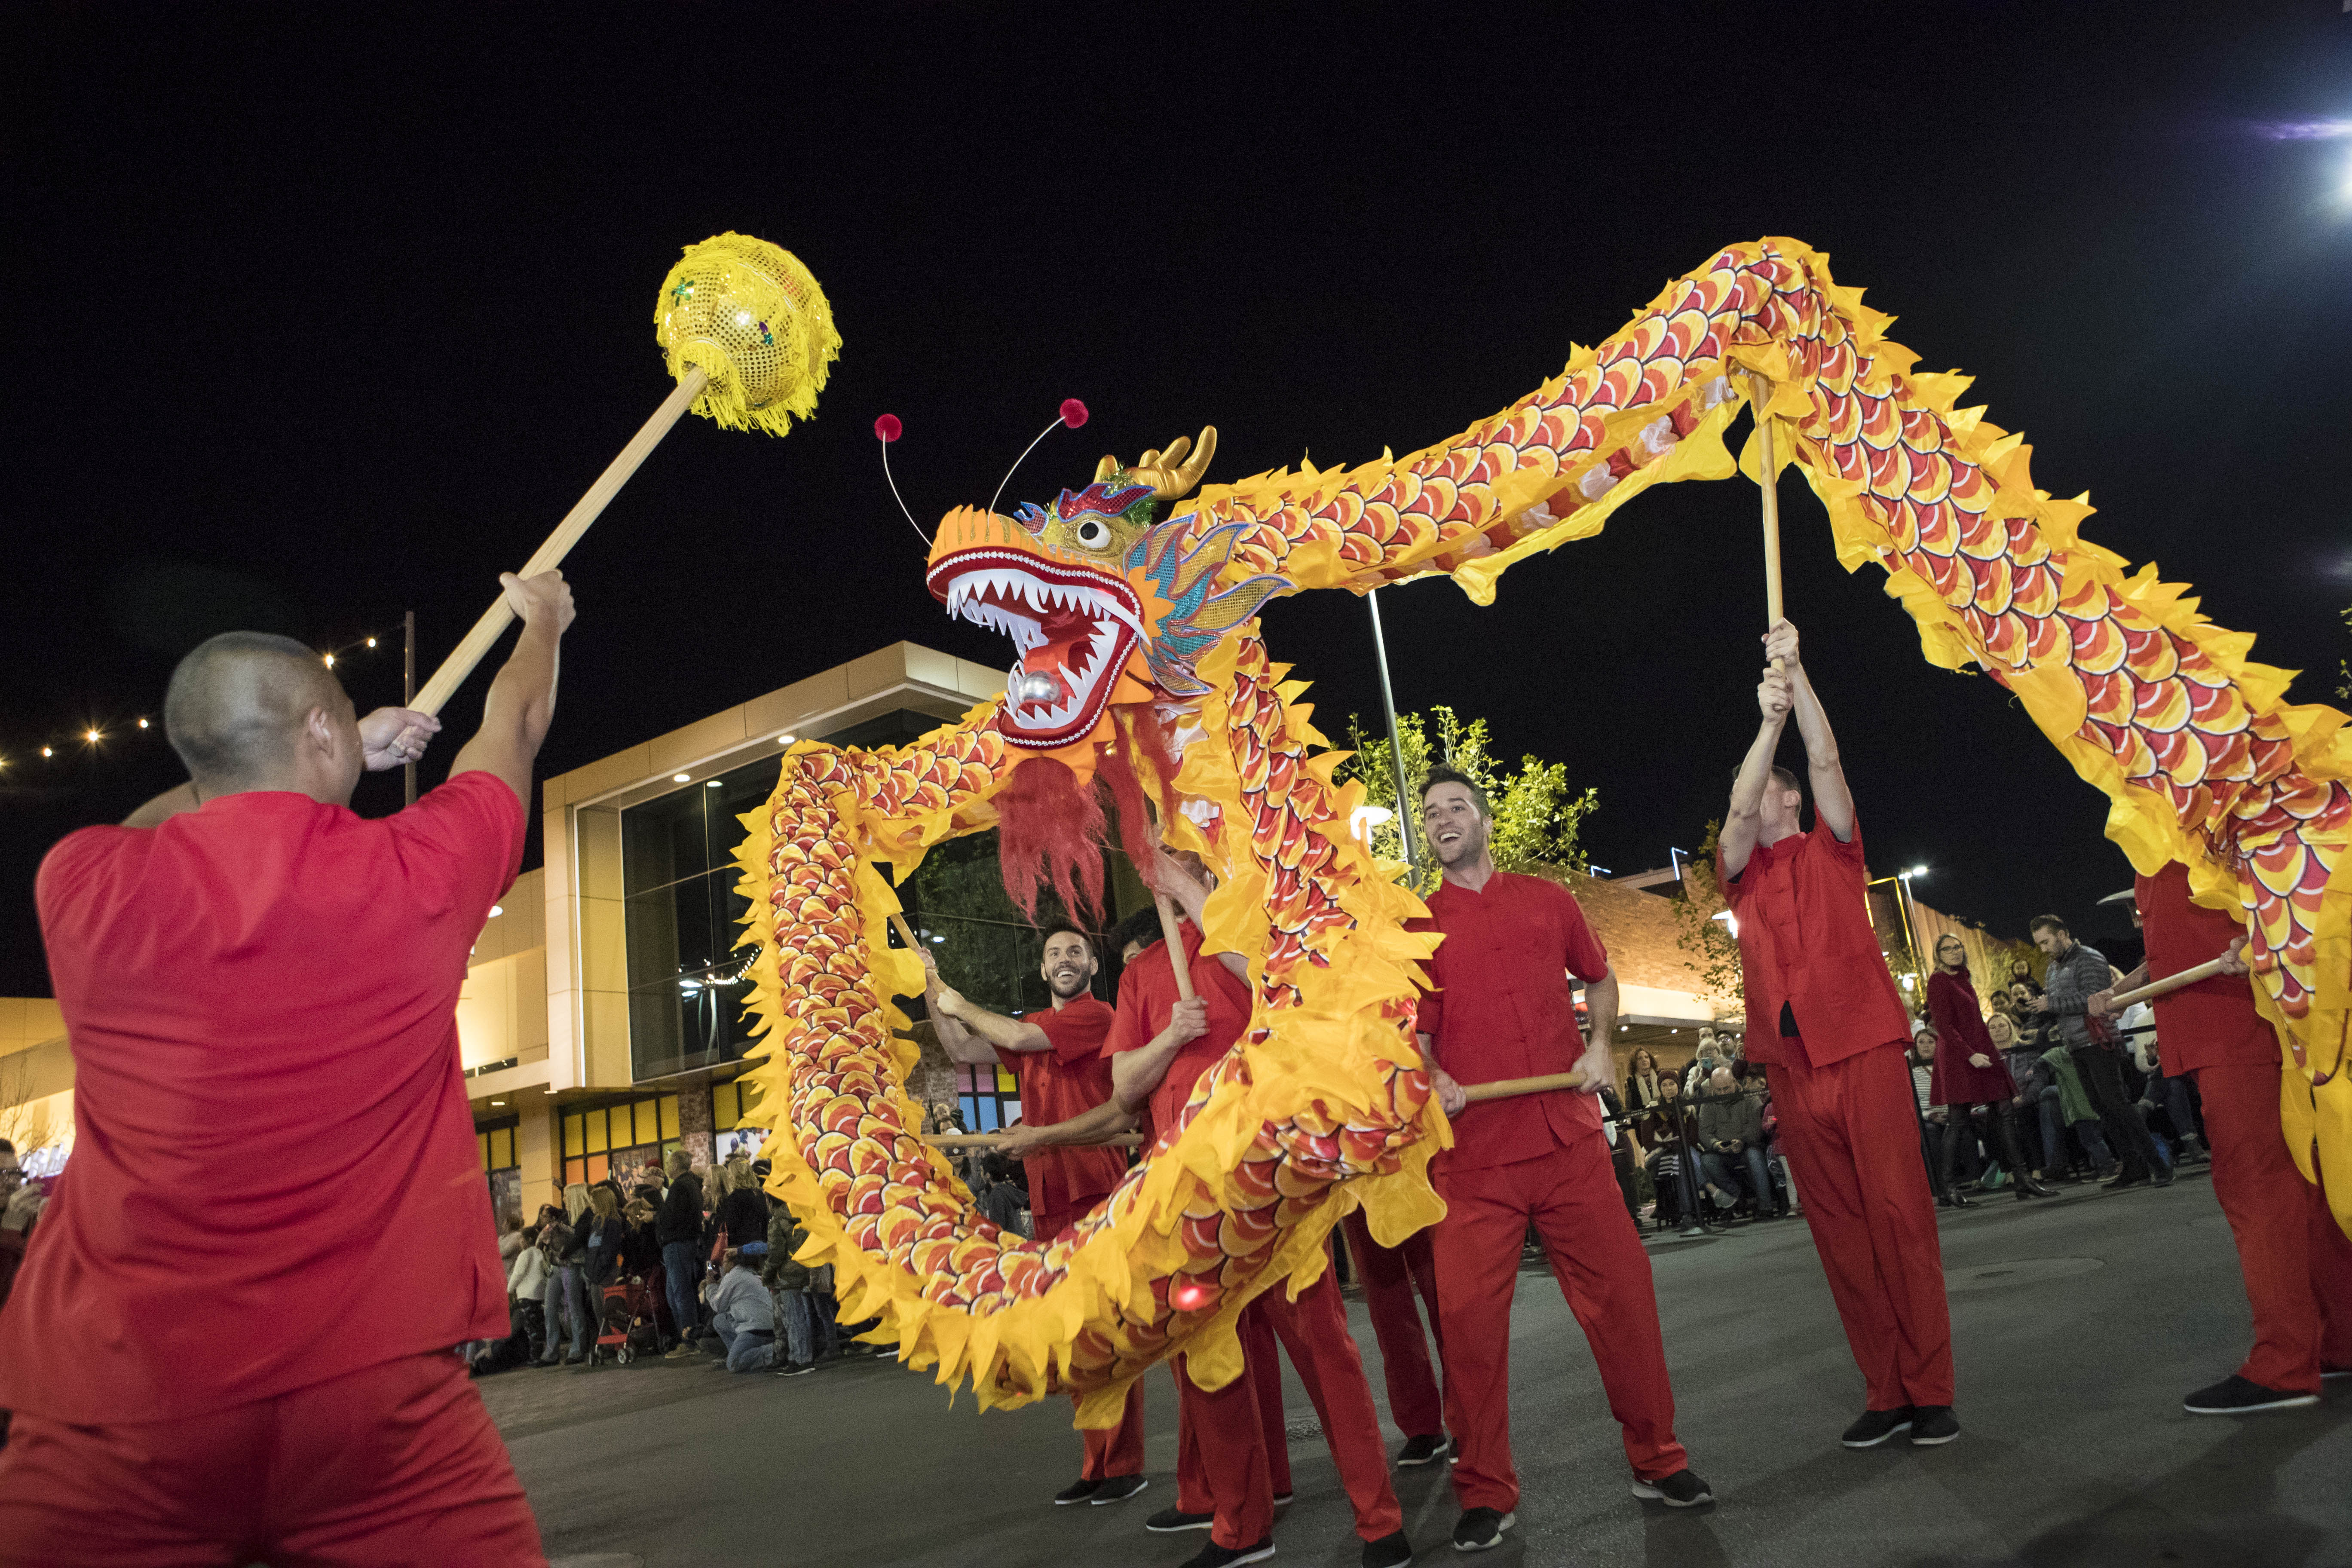 Chinese New Year Festivities 2023 in Las Vegas - Dates